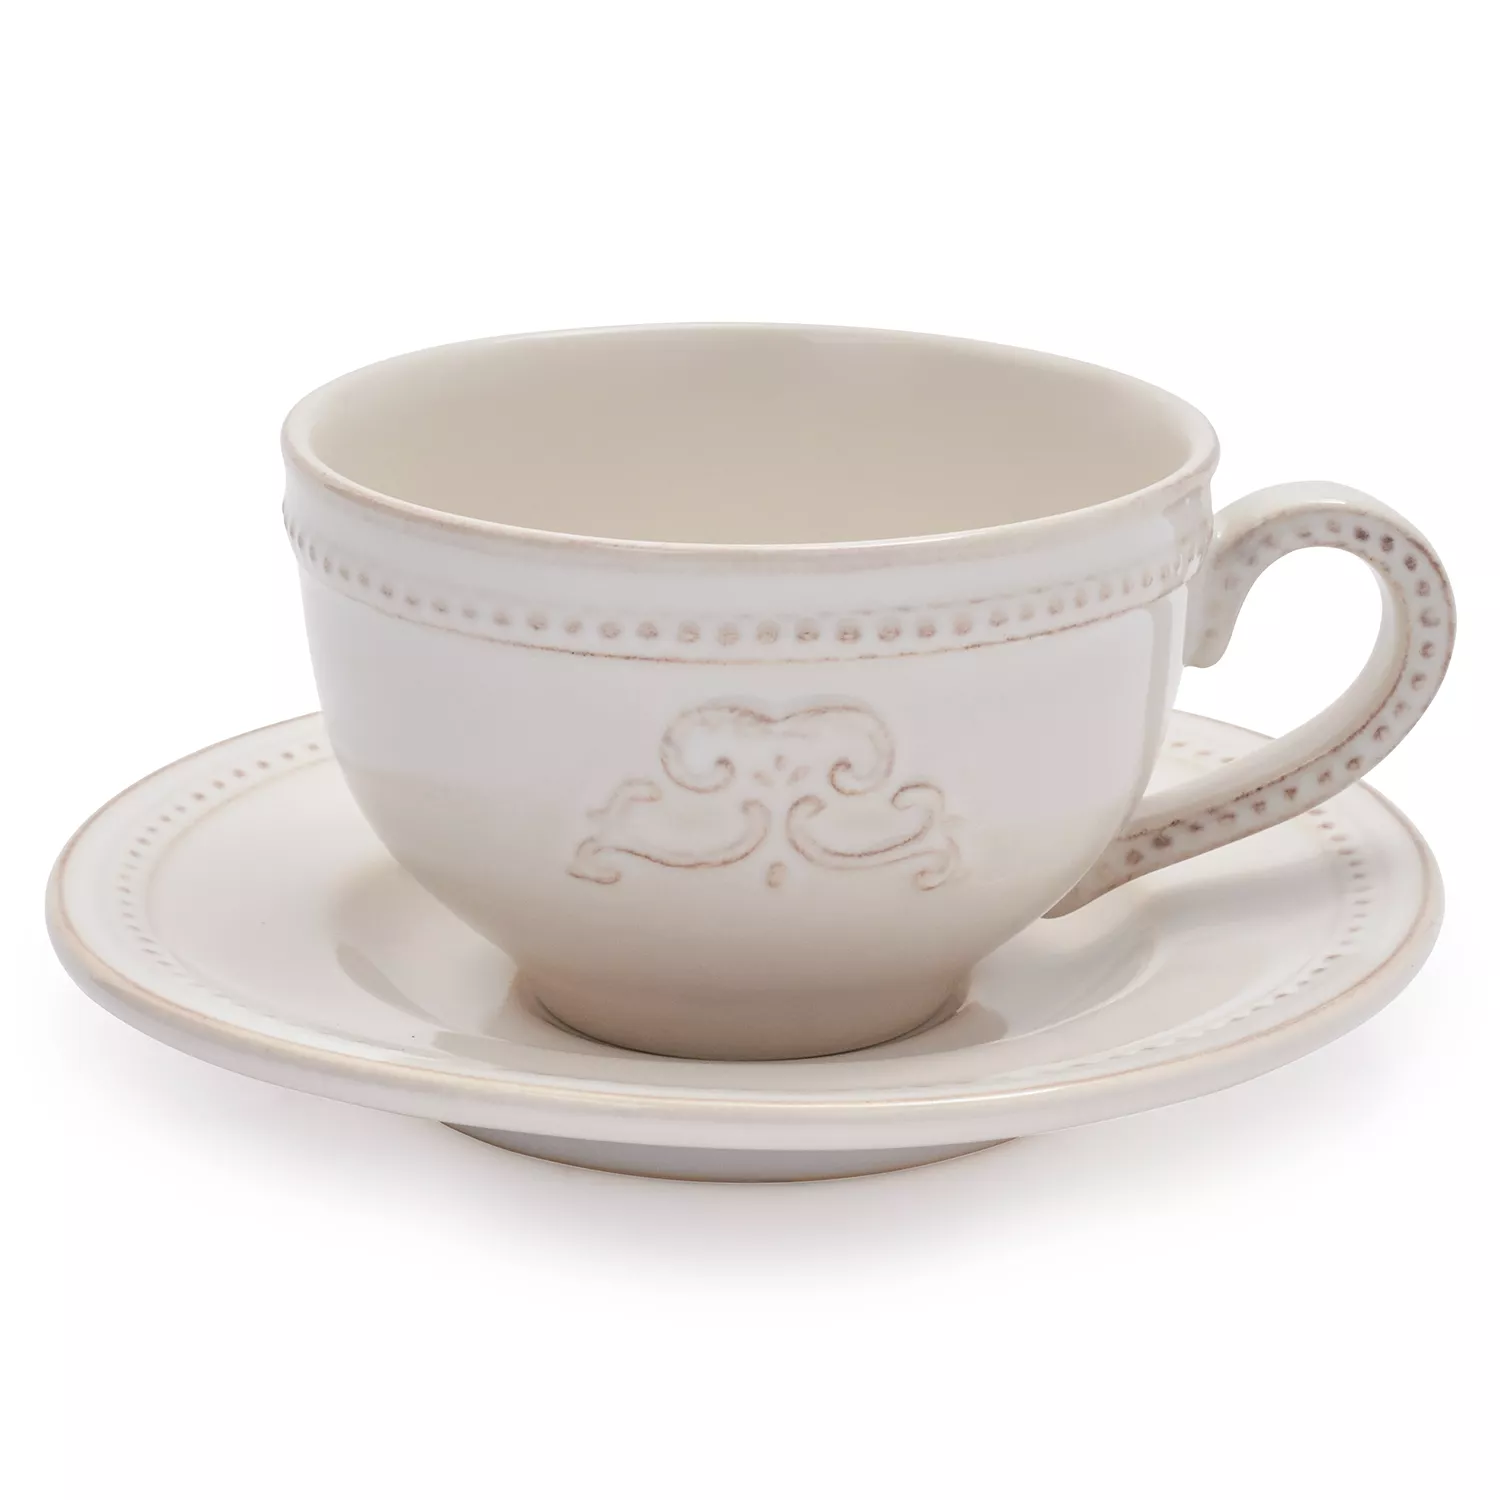 Sur La Table Pearl Stoneware Cappuccino Mug with Saucer